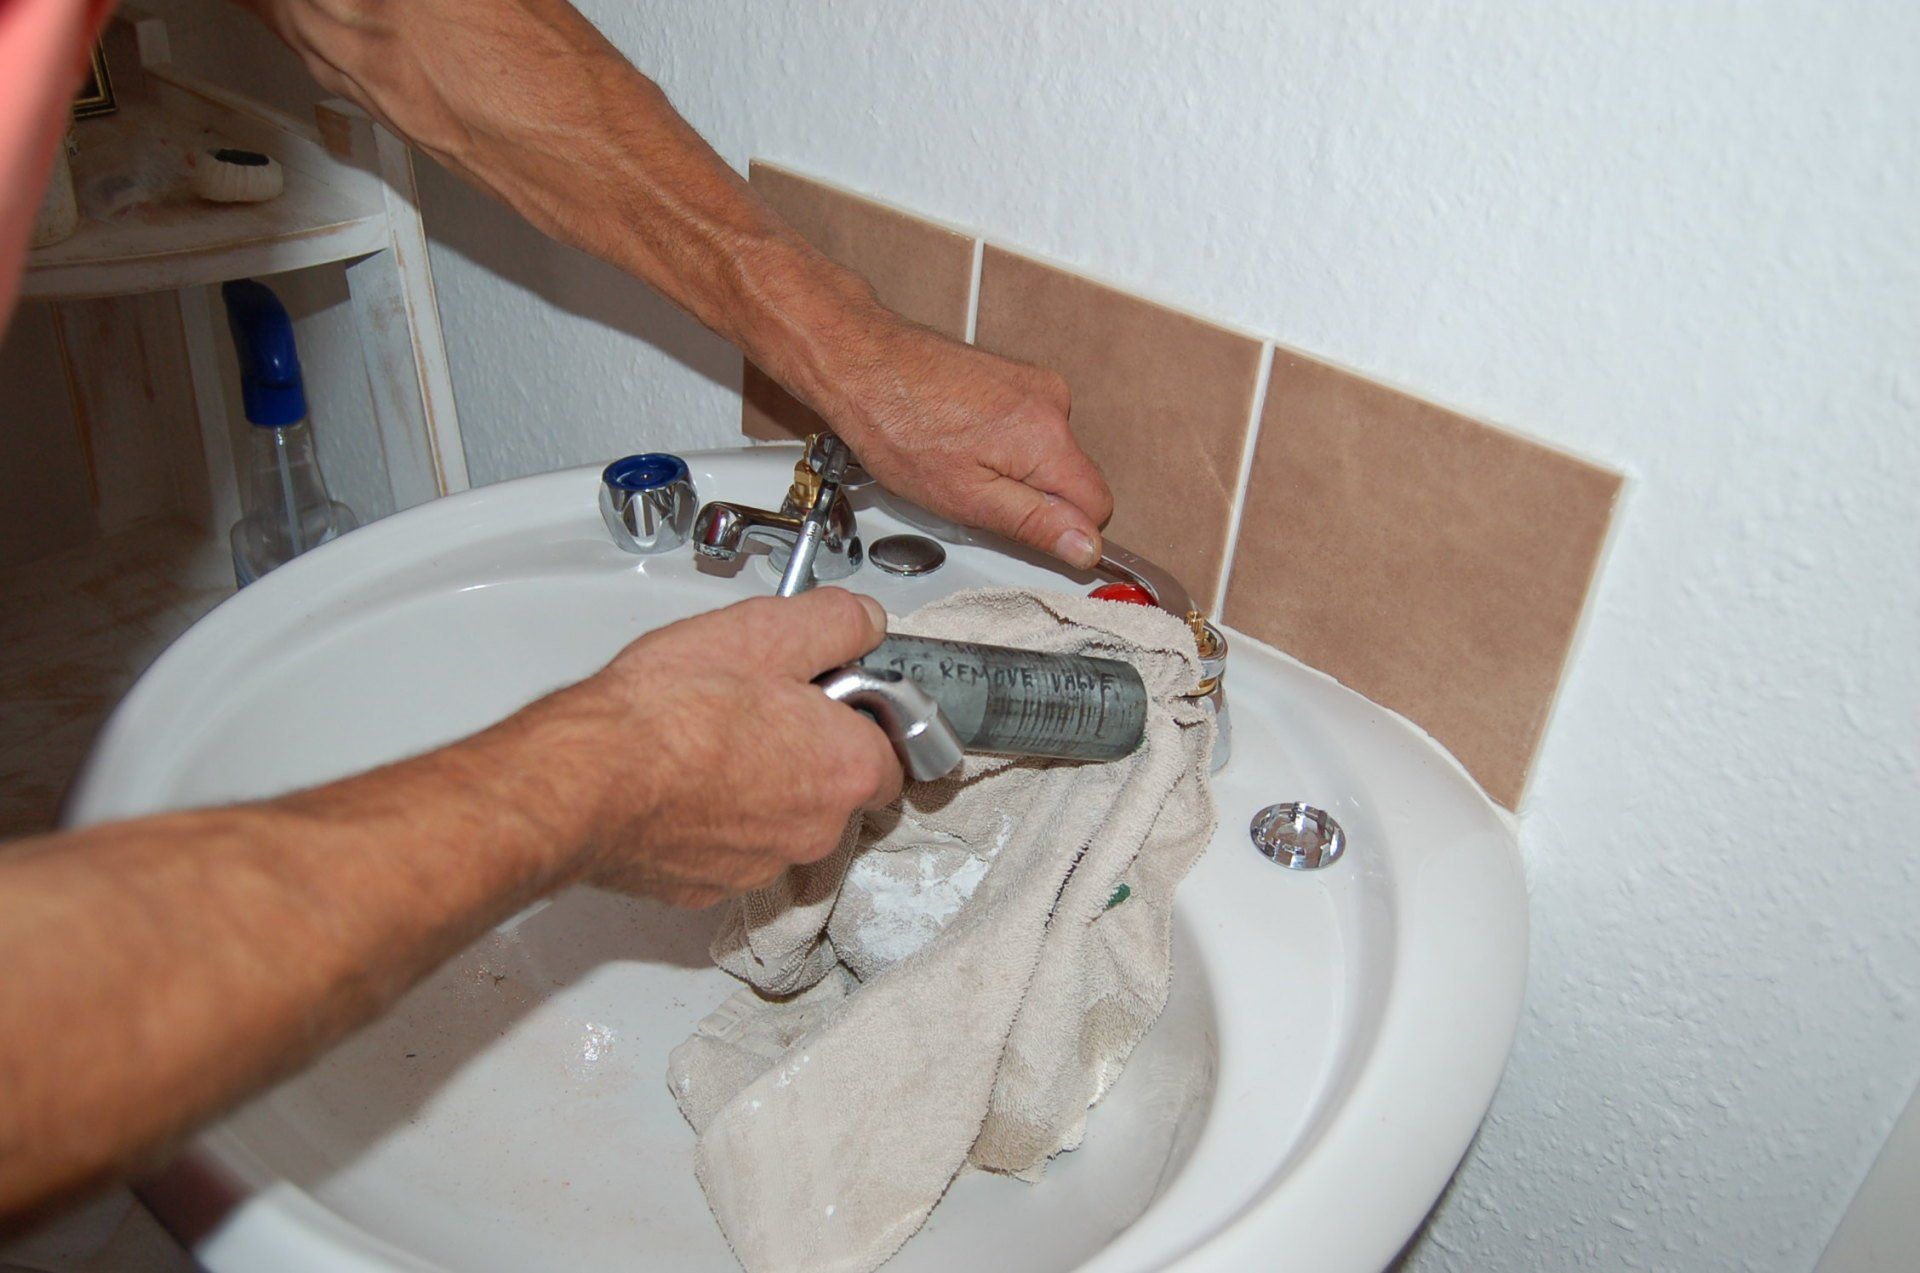 Removing seized tap valves